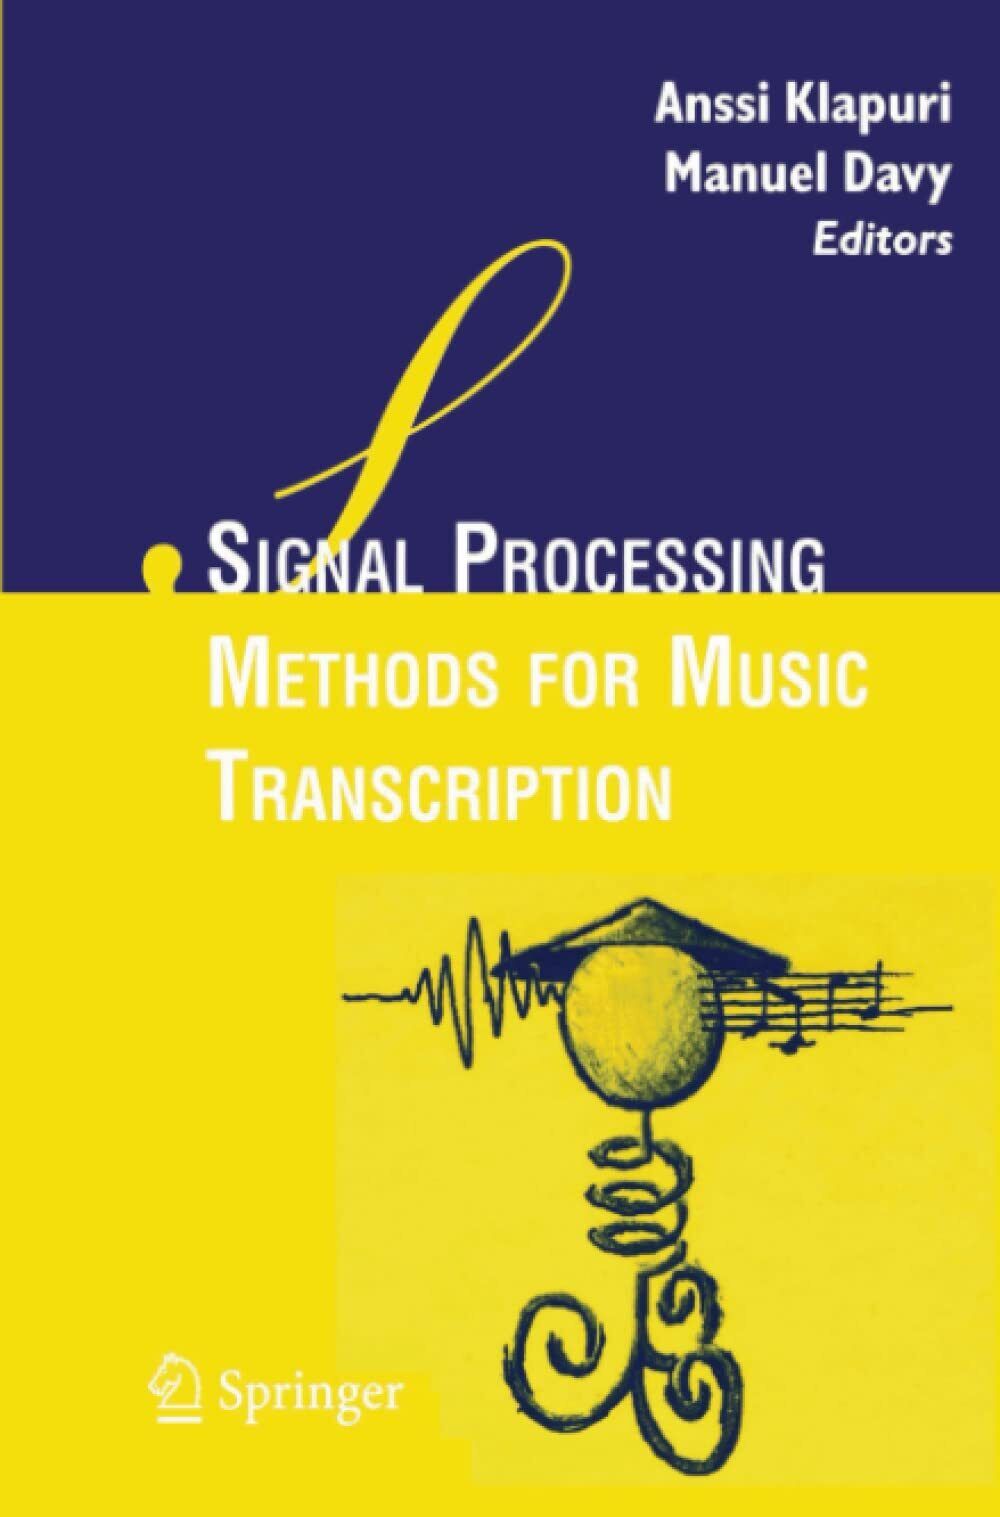 Signal Processing Methods for Music Transcription - Anssi Klapuri - pringer,2010